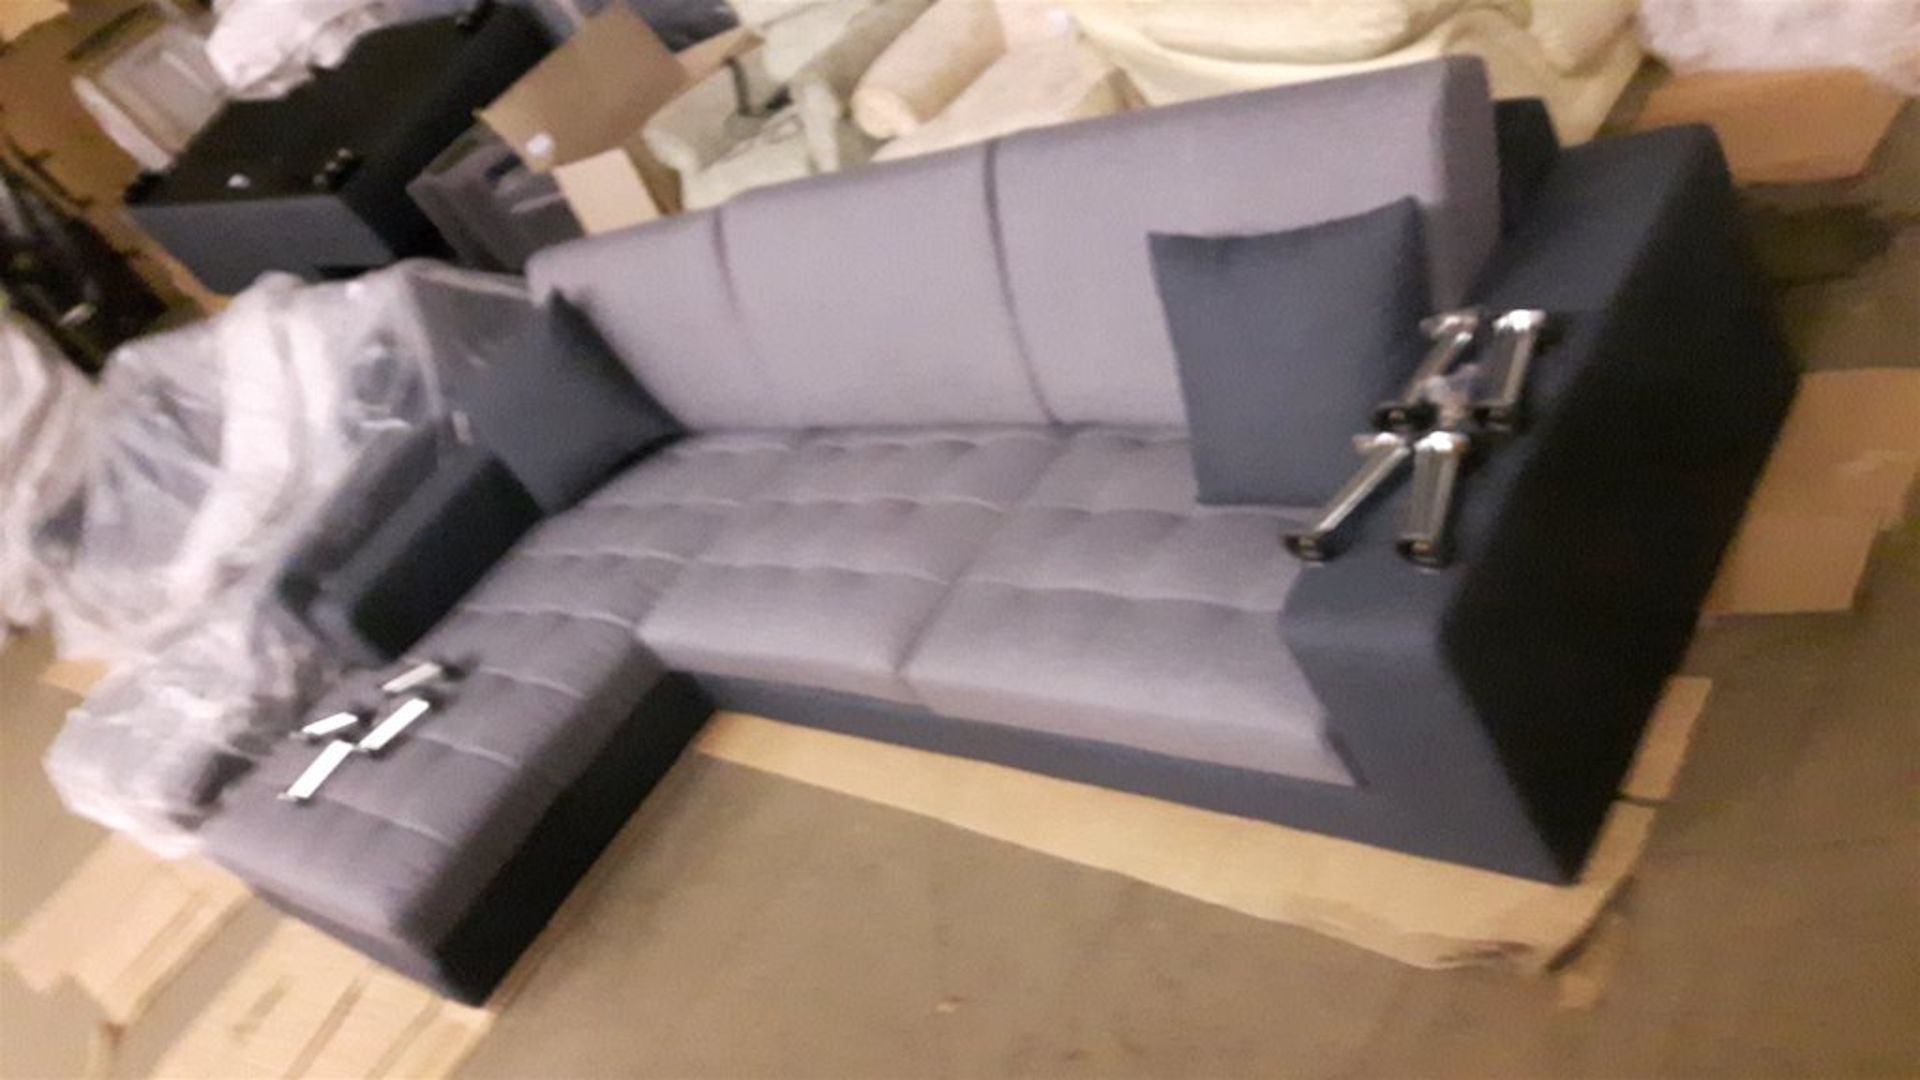 Penbury Grey mix sofa and chaise longue set with chrome legs.